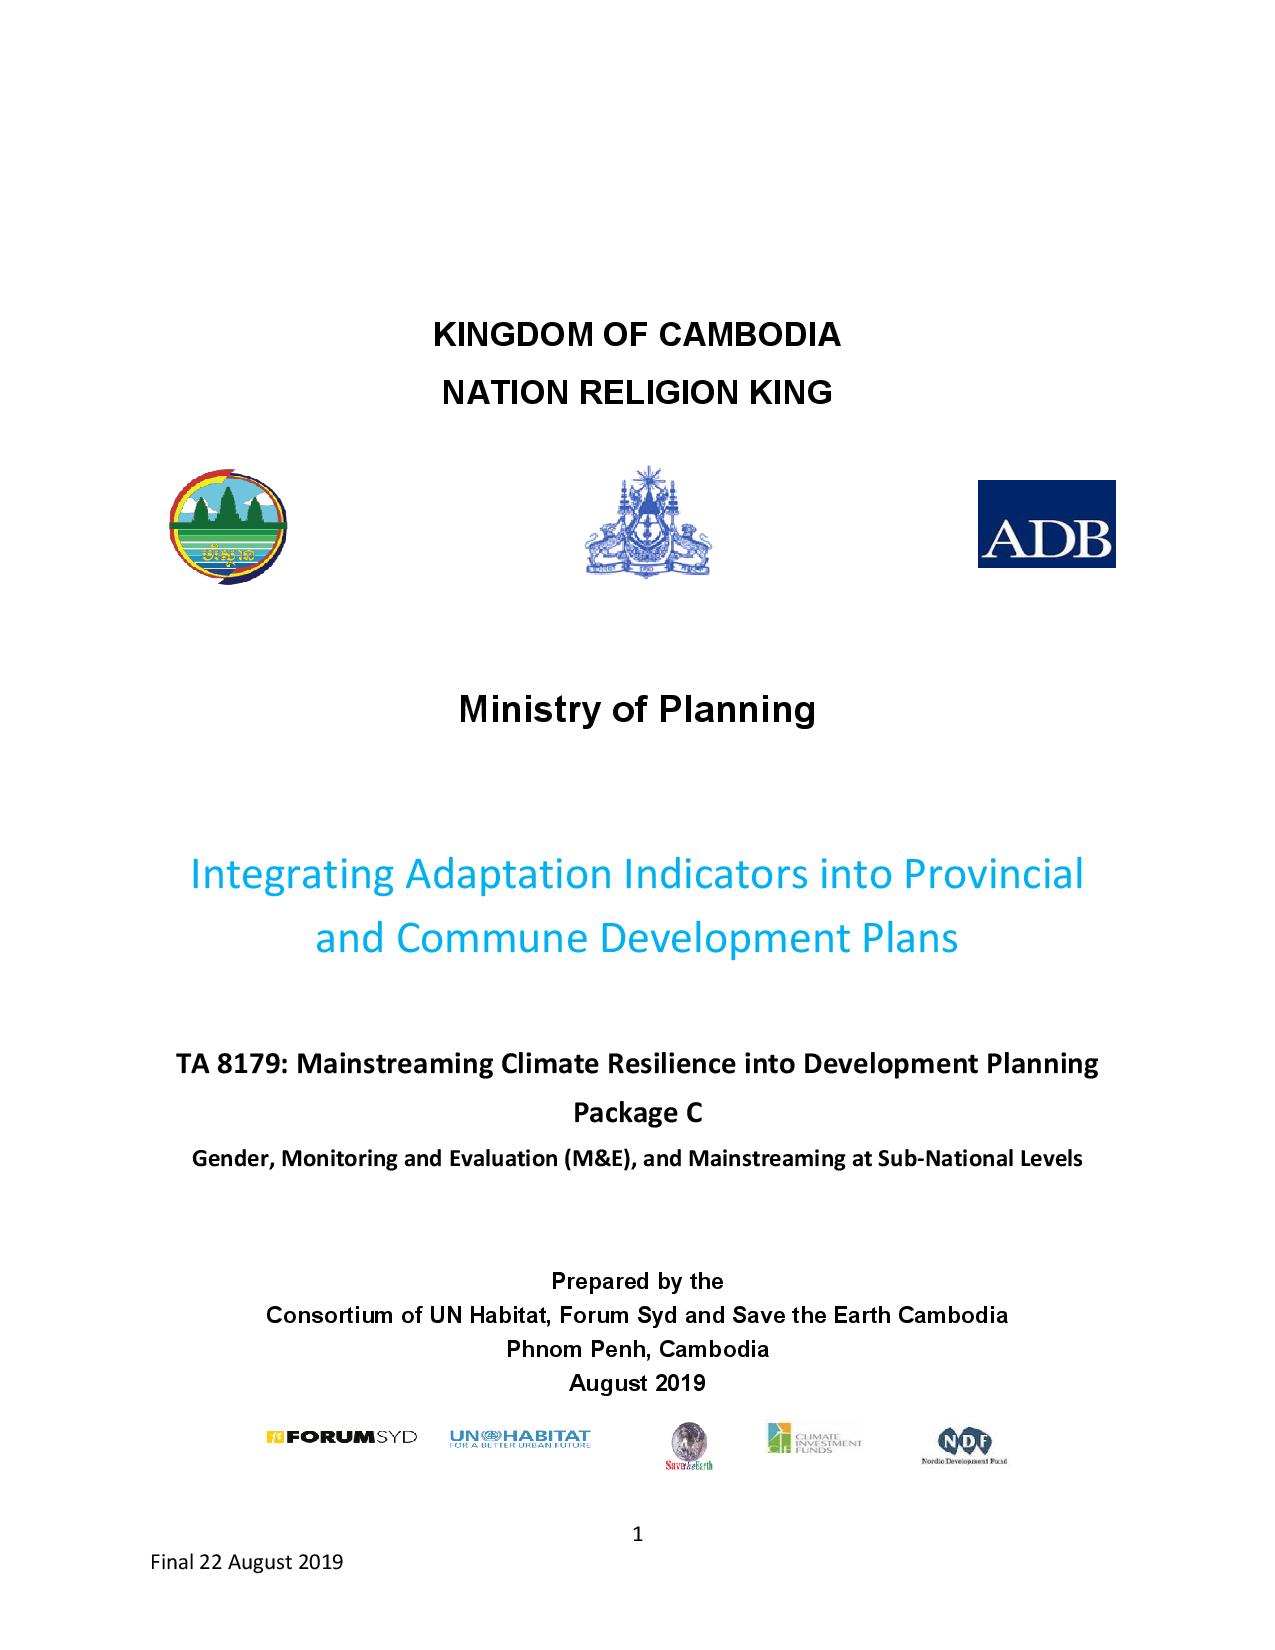 Integrating Adaptation Indicators into Provincial and Commune Development Plans